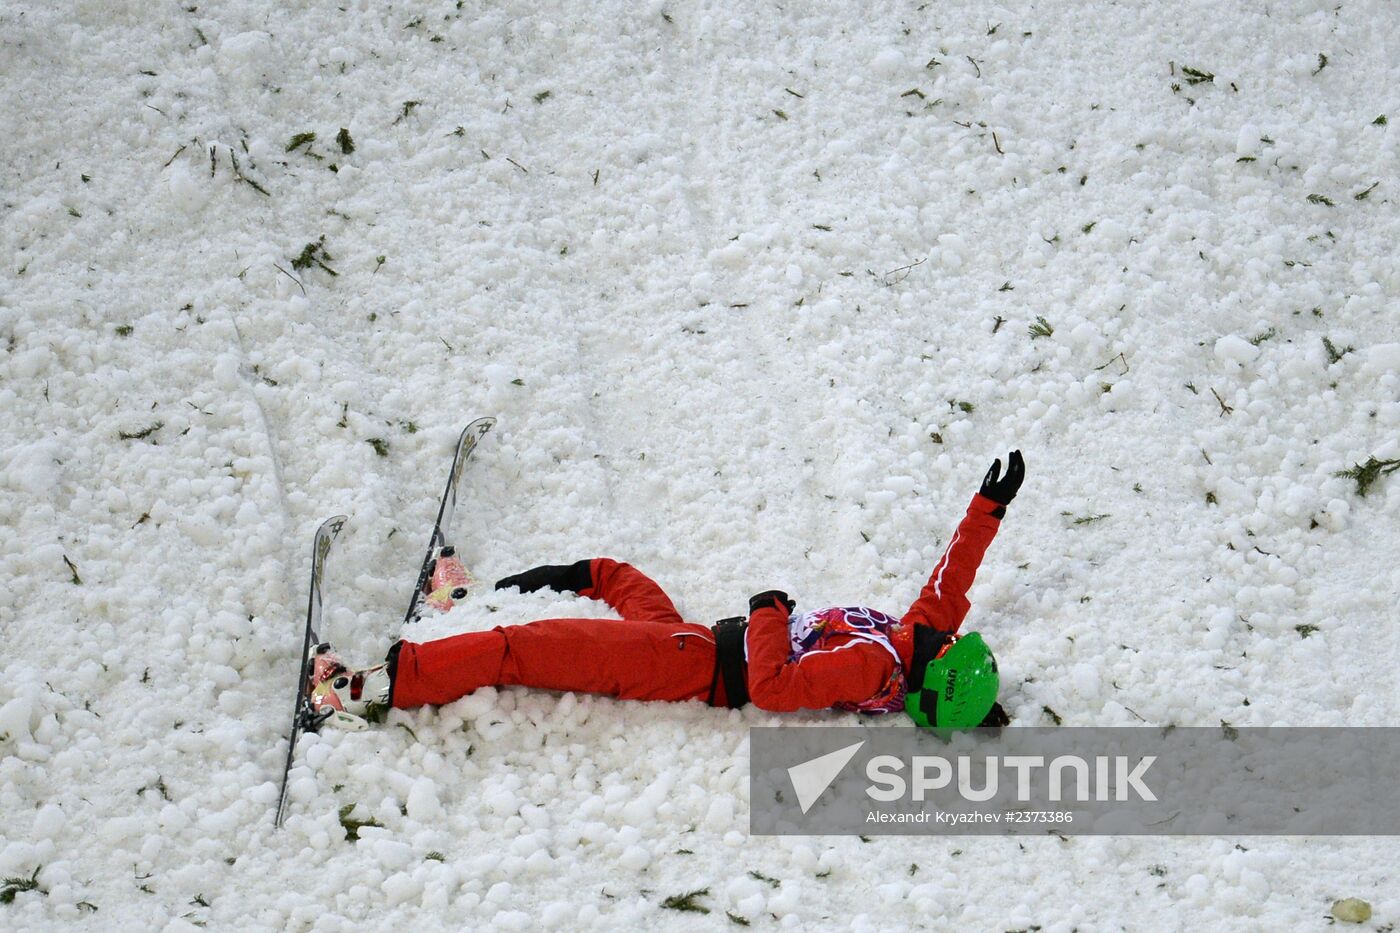 2104 Winter Olympics. Freestyle skiing. Women. Aerials